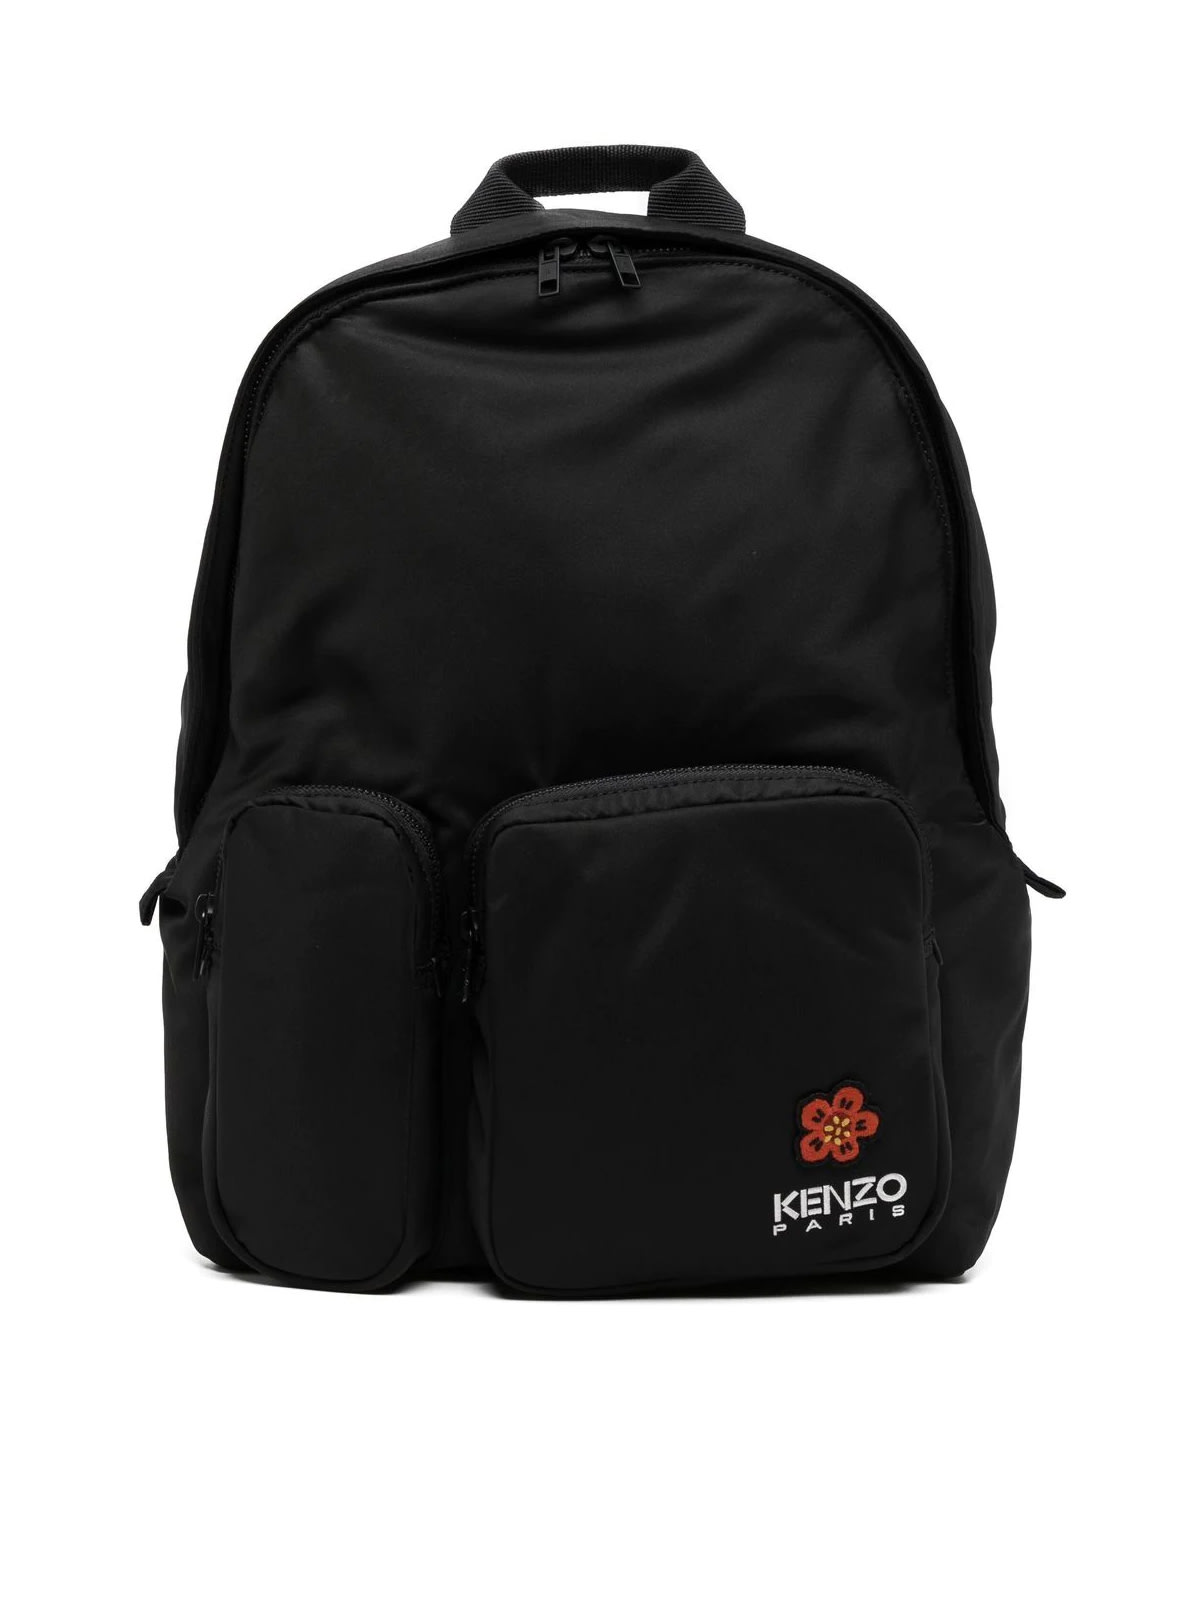 Kenzo Crest Backpack